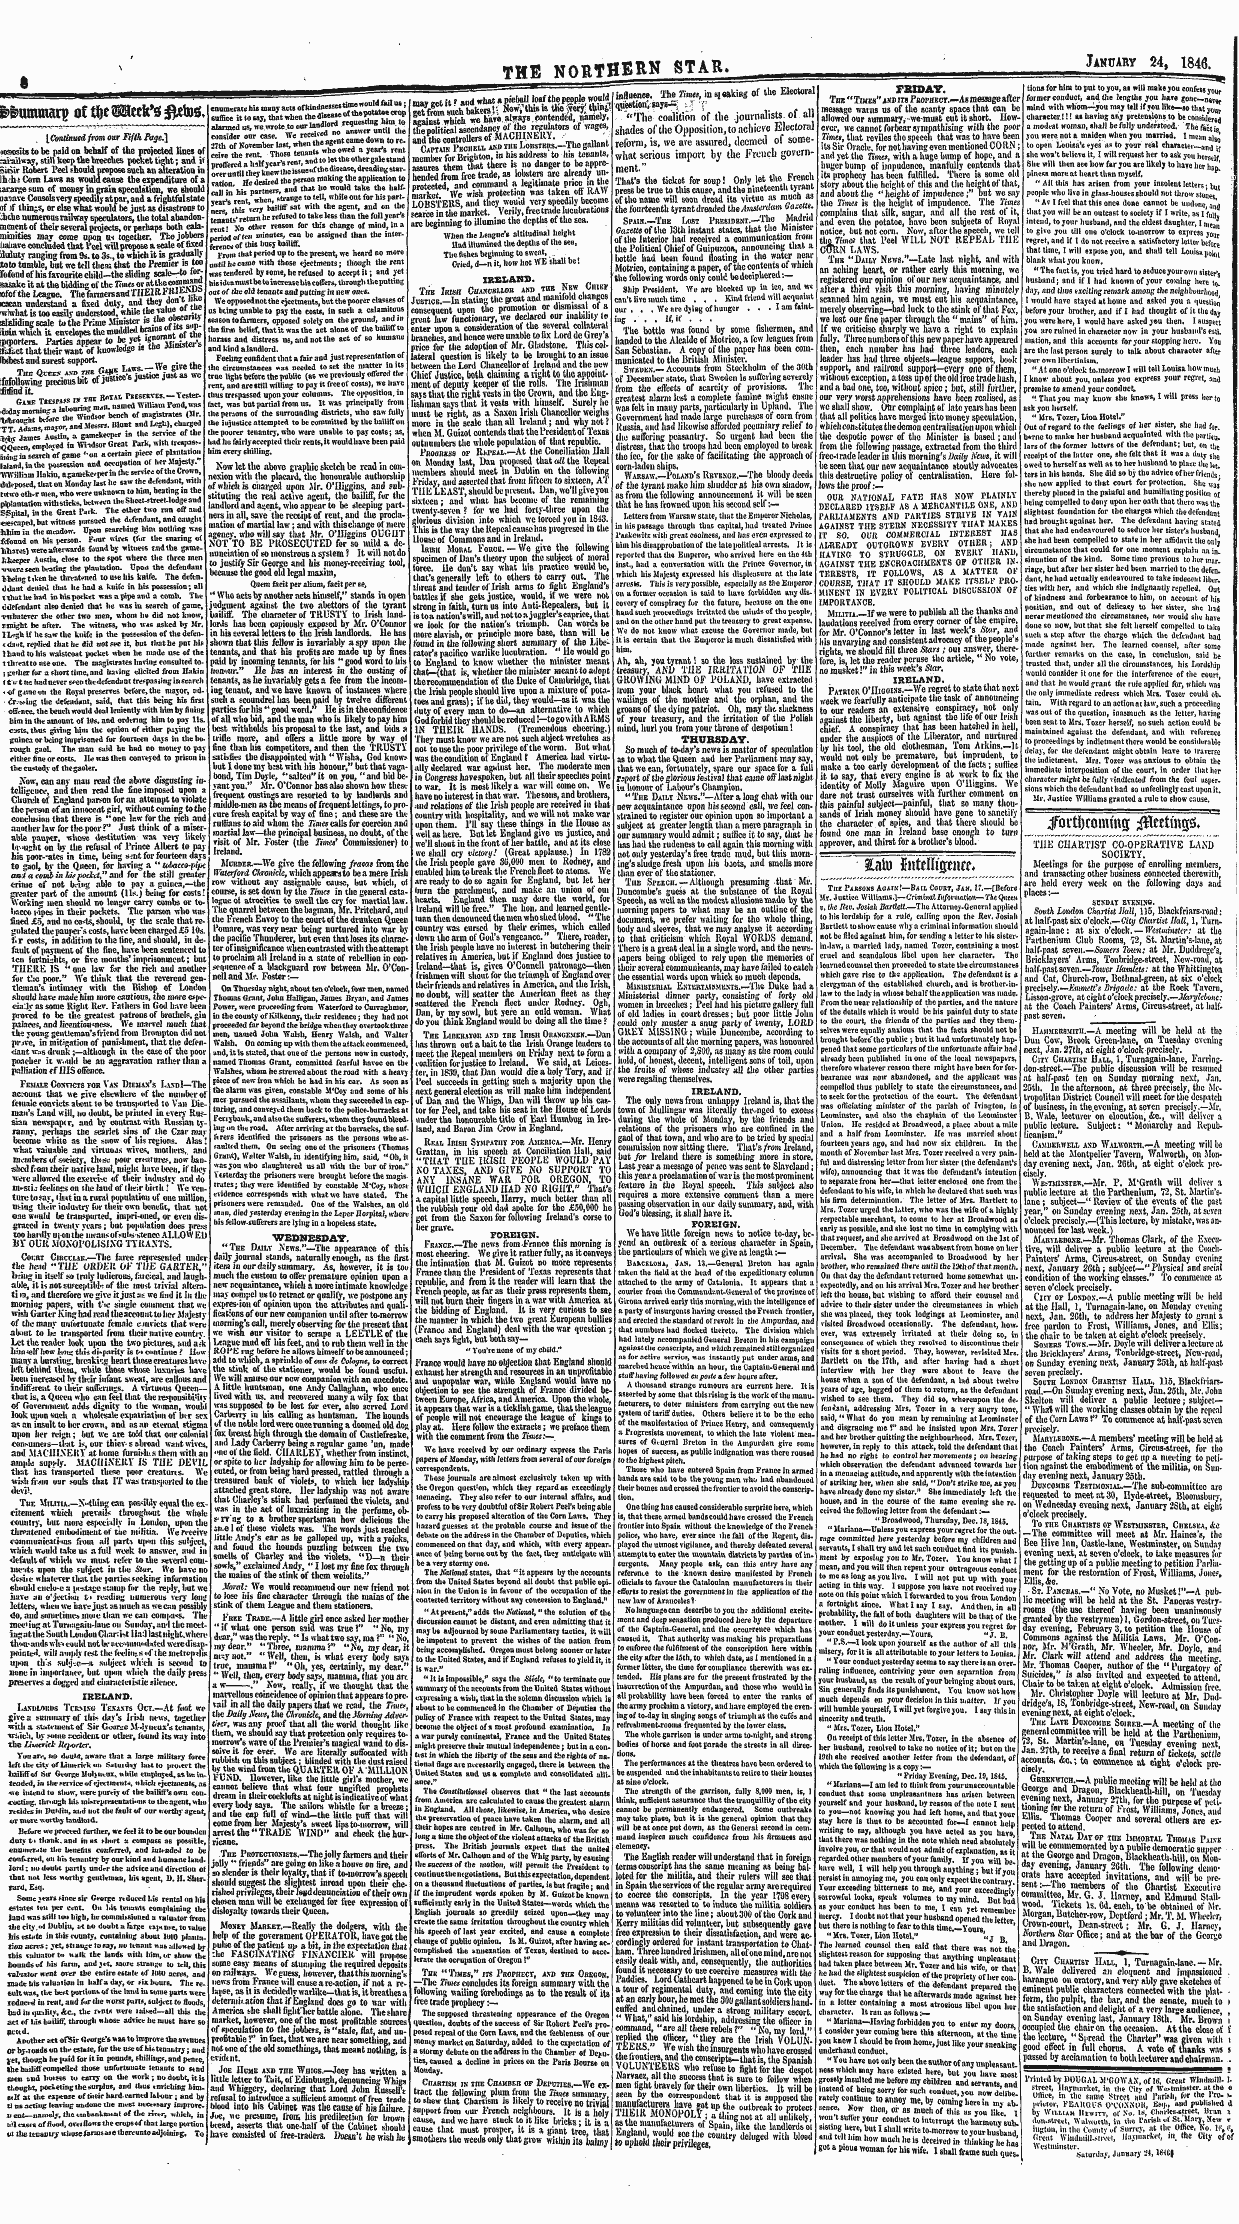 Northern Star (1837-1852): jS F Y, 4th edition - , Lalu Jntelliffeiue*